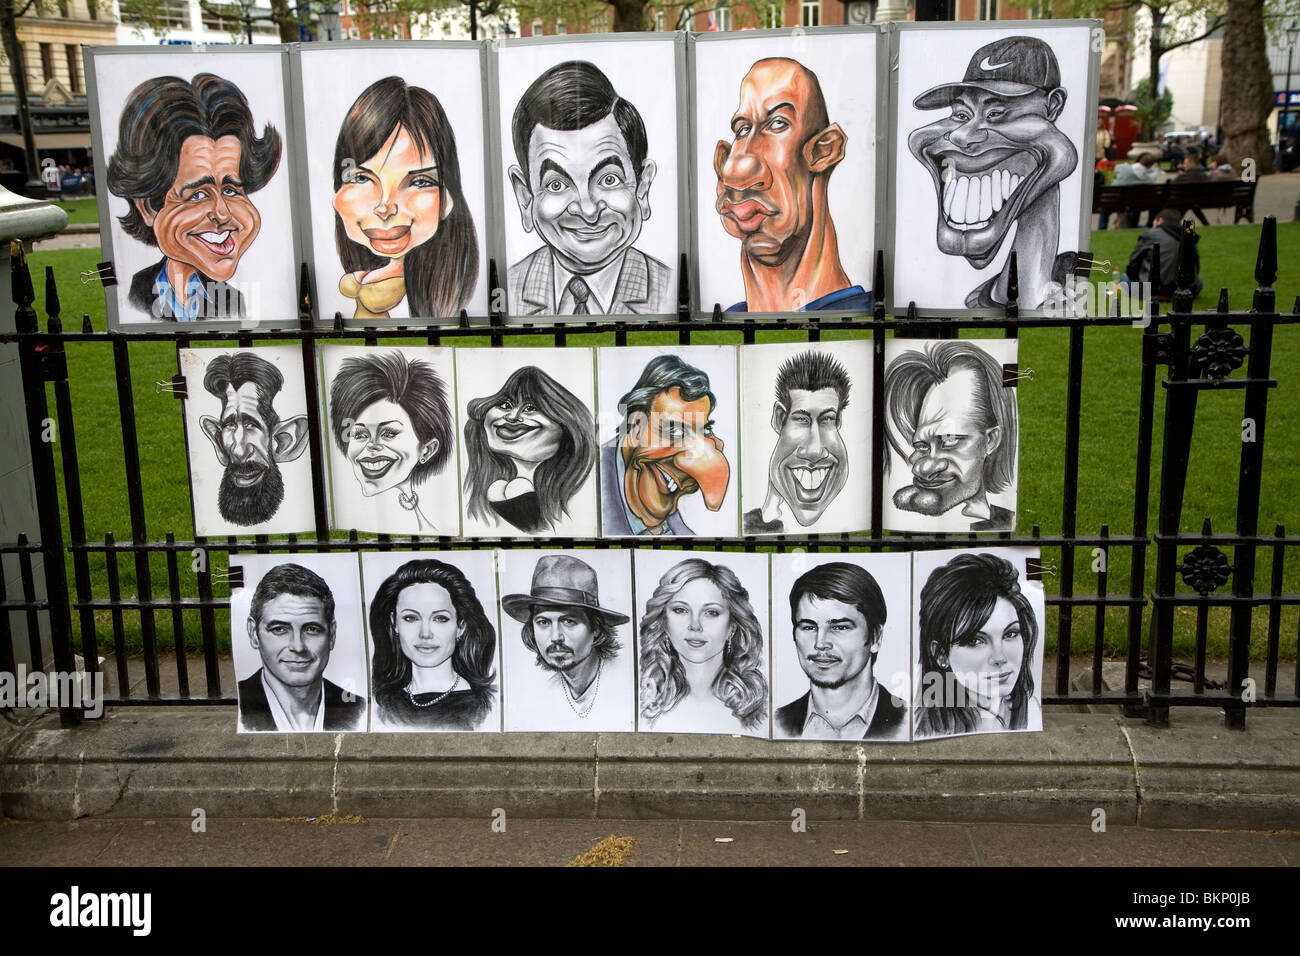 Retratista de la calle caricaturas de personas famosas, Leicester Square, Londres, Inglaterra Foto de stock